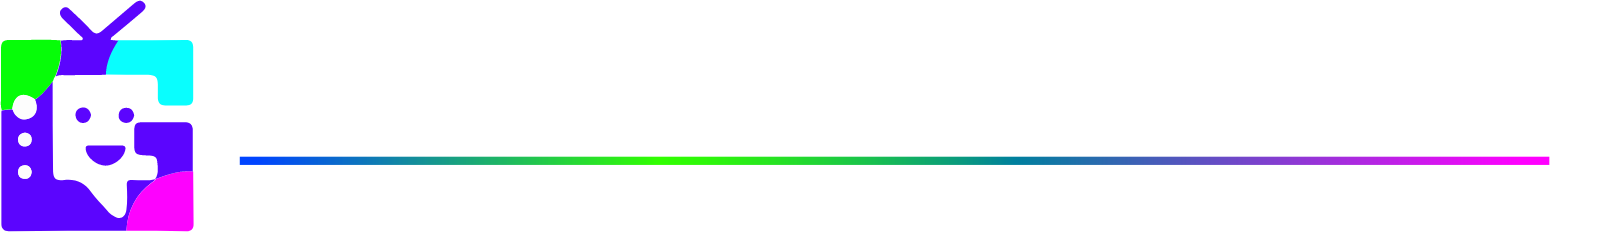 Grom Social Enterprises Logo groß für dunkle Hintergründe (transparentes PNG)